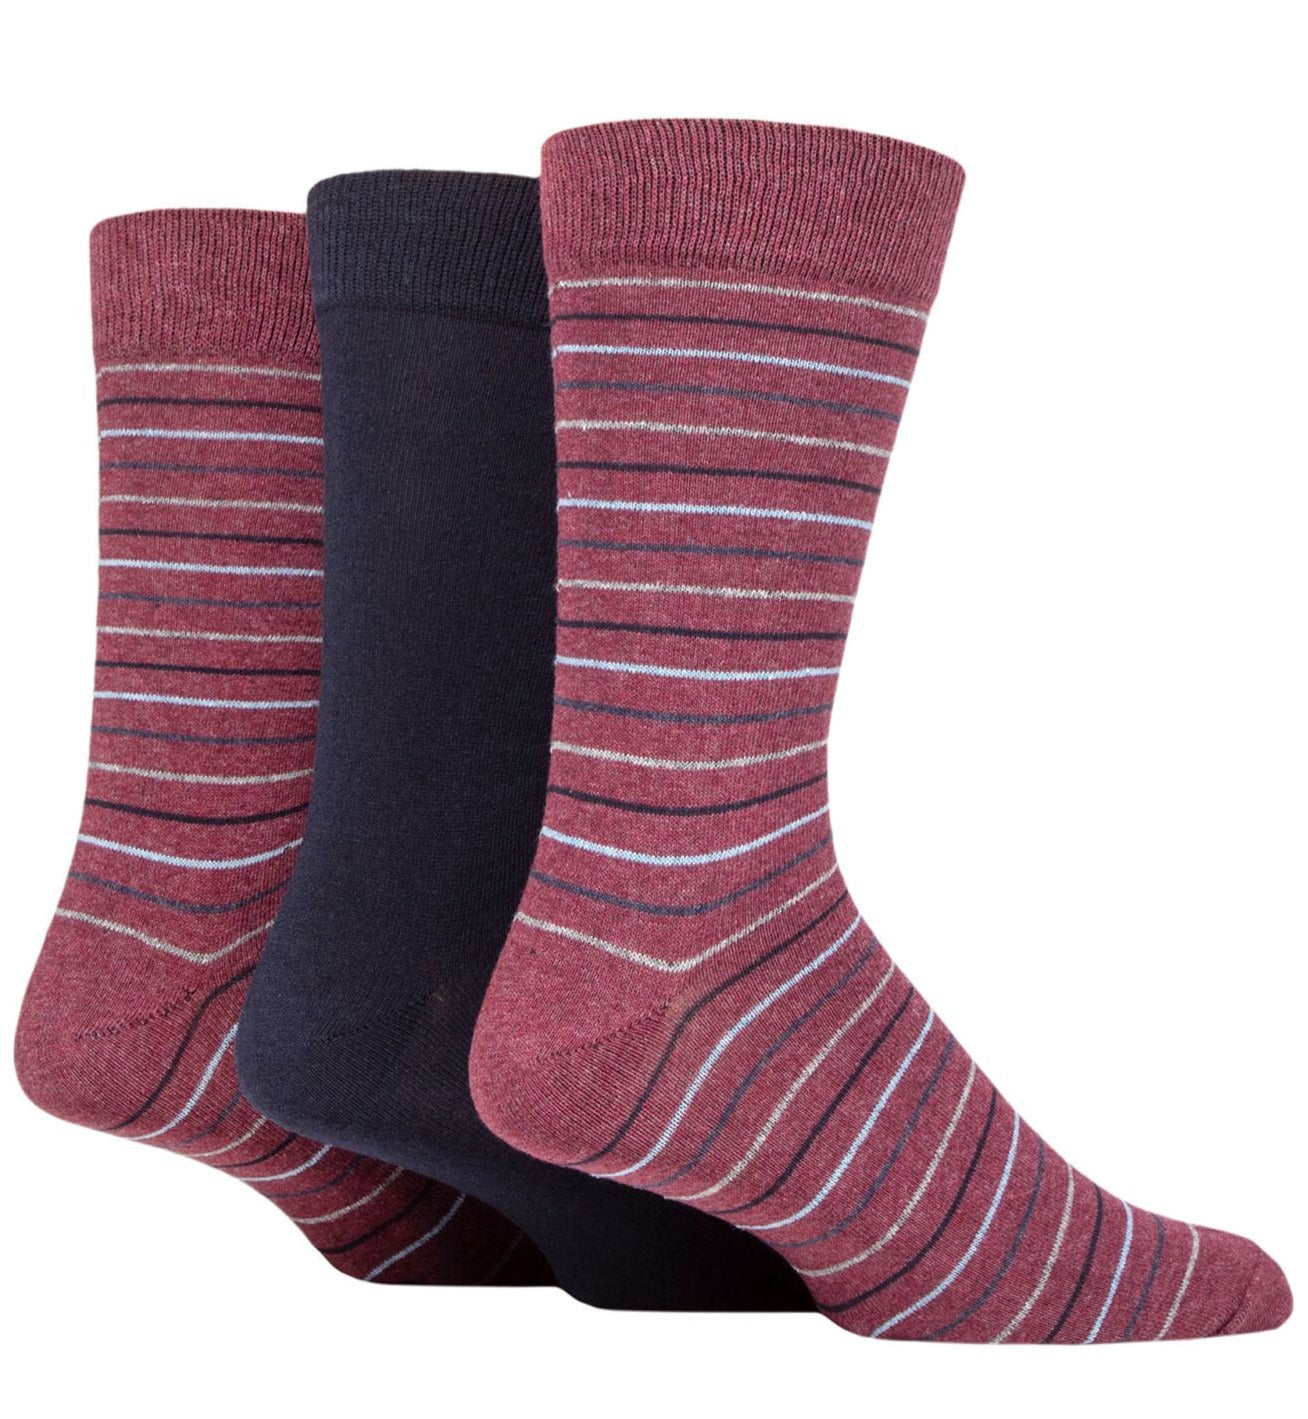 TORE 3Pk 100% Recycled Cotton Fashion Fine Stripes Socks - Men's